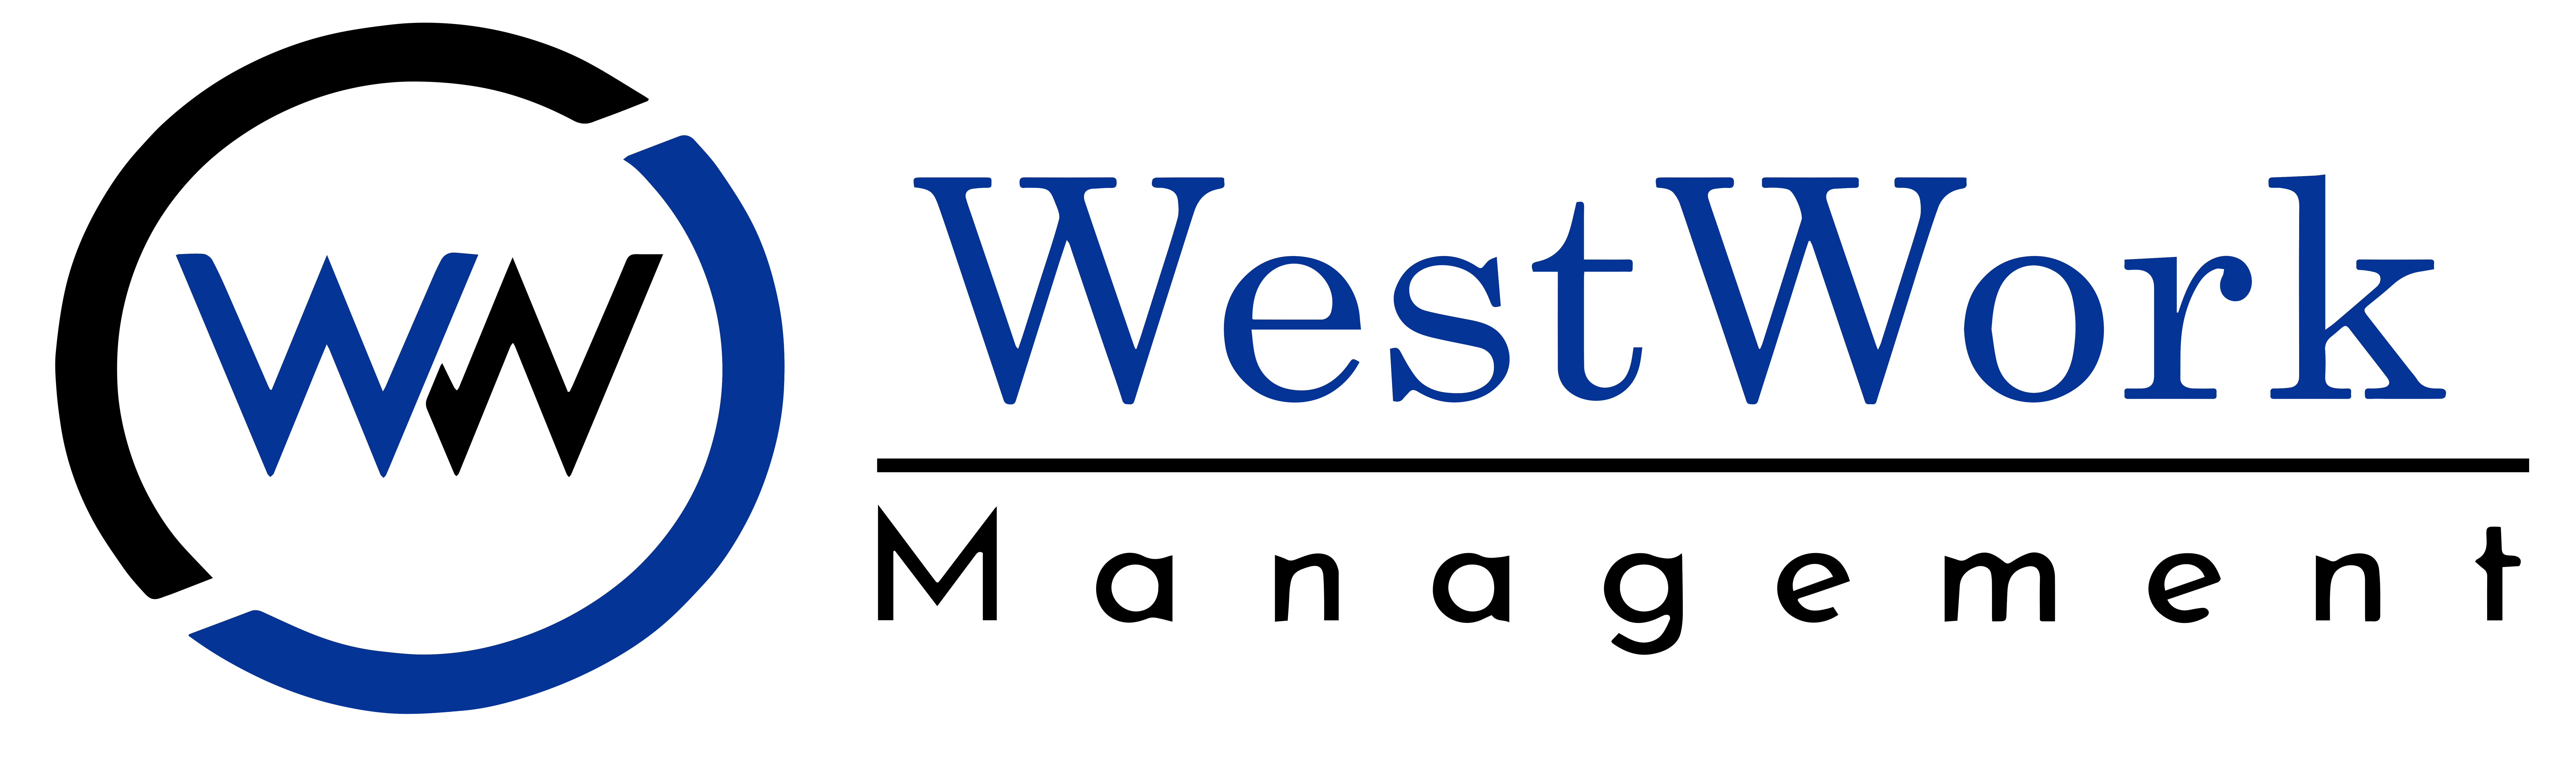 WestWork Management logo